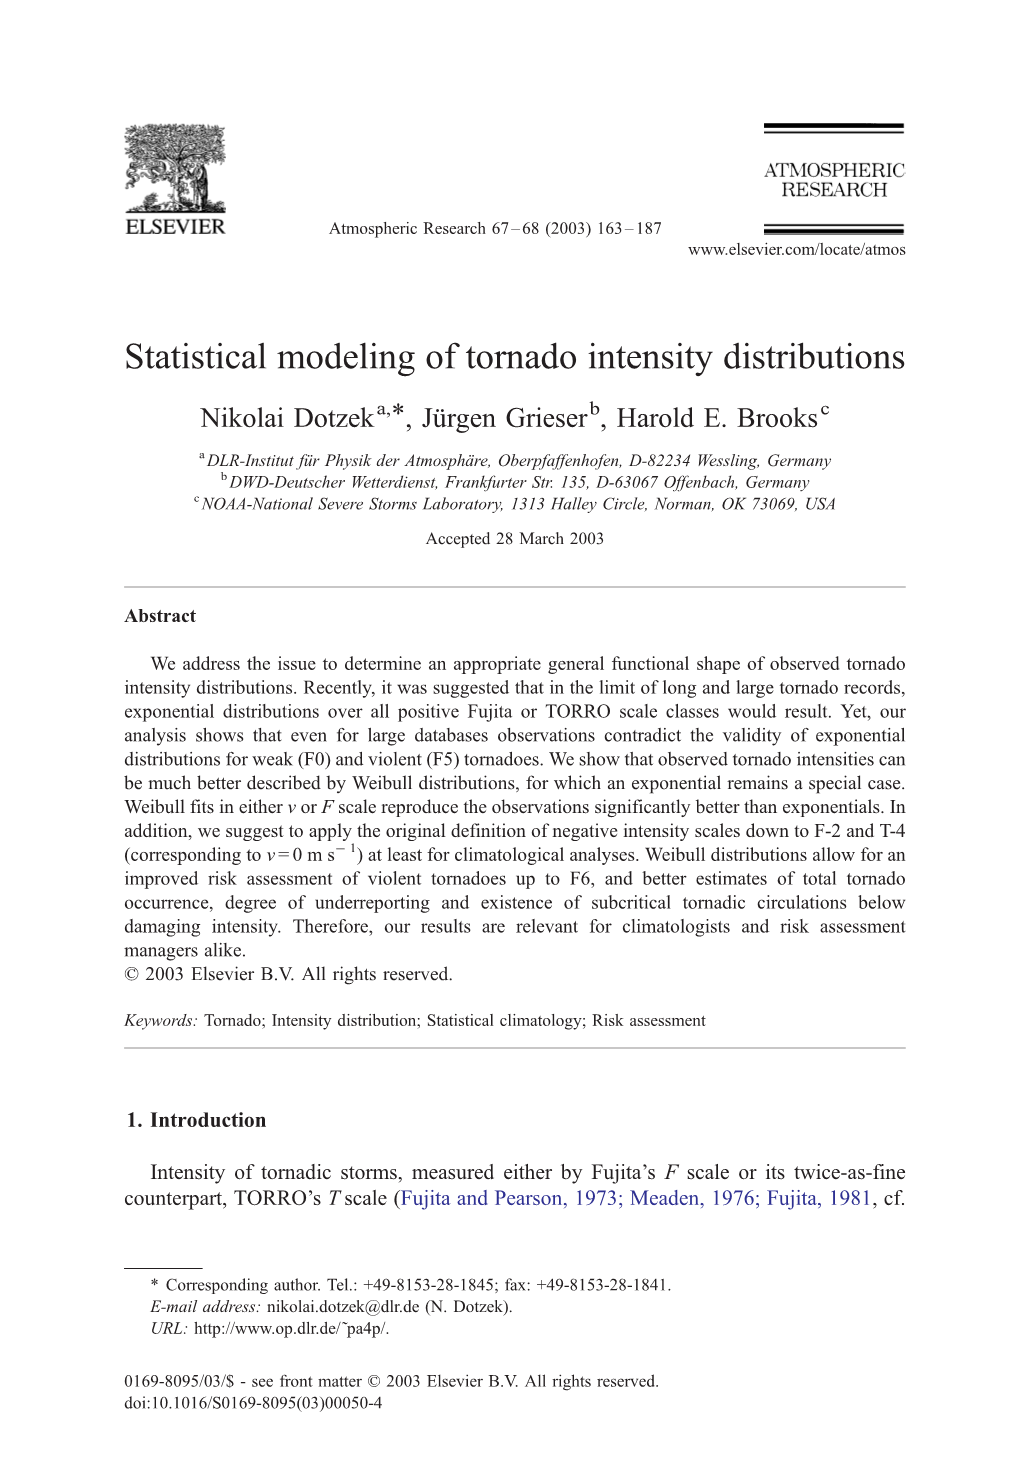 Statistical Modeling of Tornado Intensity Distributions